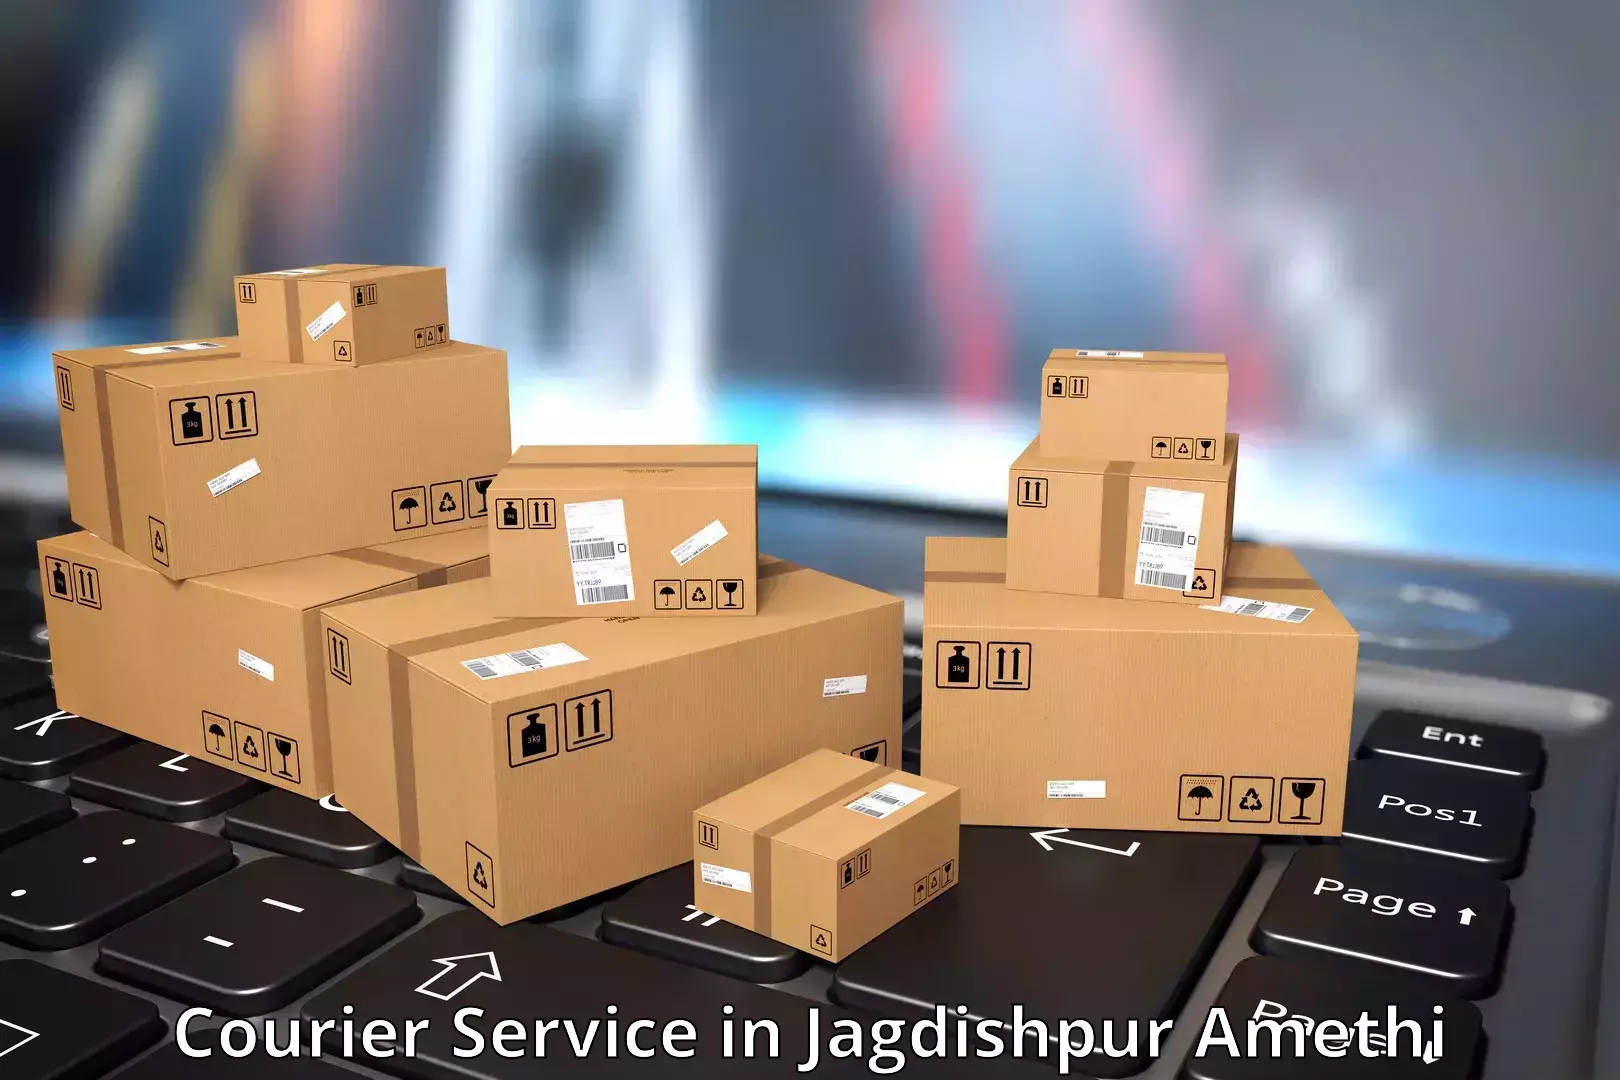 Remote area delivery in Jagdishpur Amethi